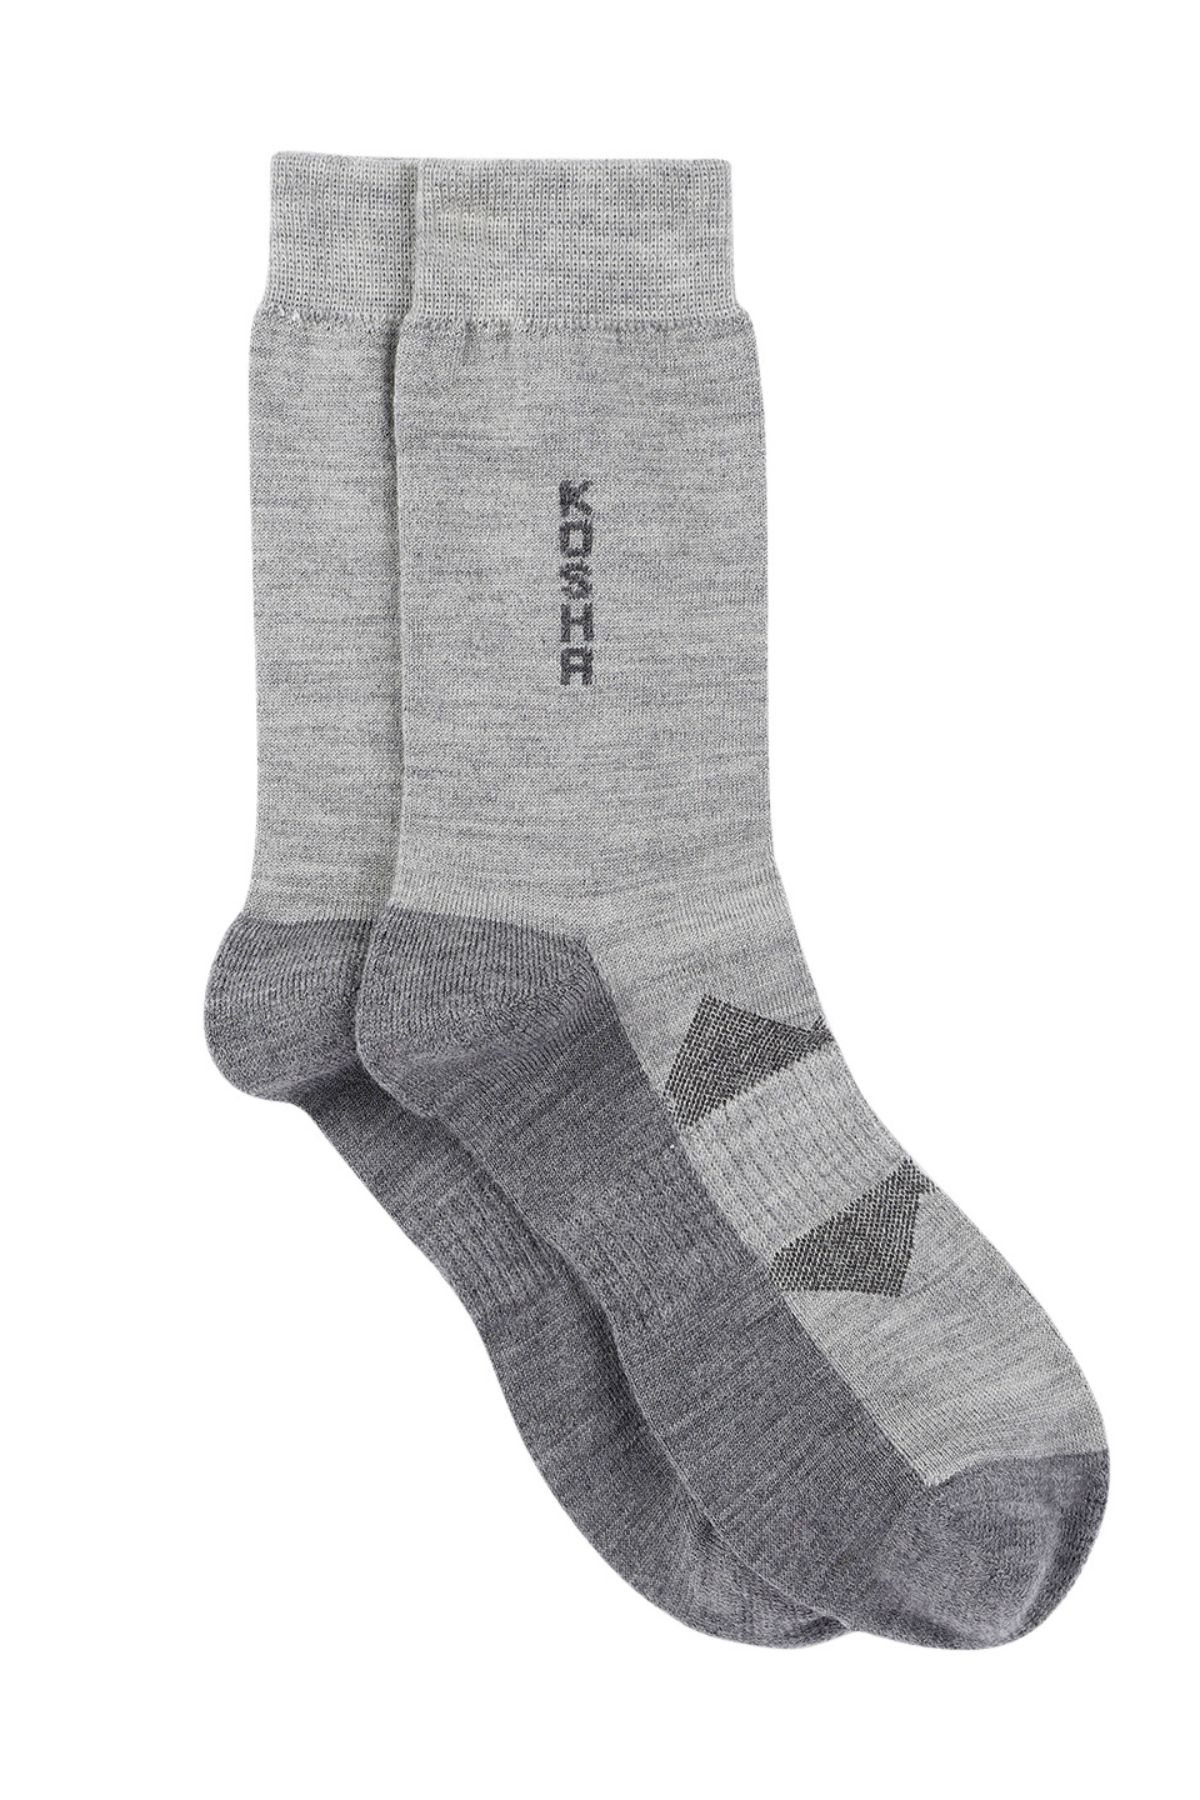 Cushioned Merino Wool Light Grey & Dark Grey Regular Socks | Men